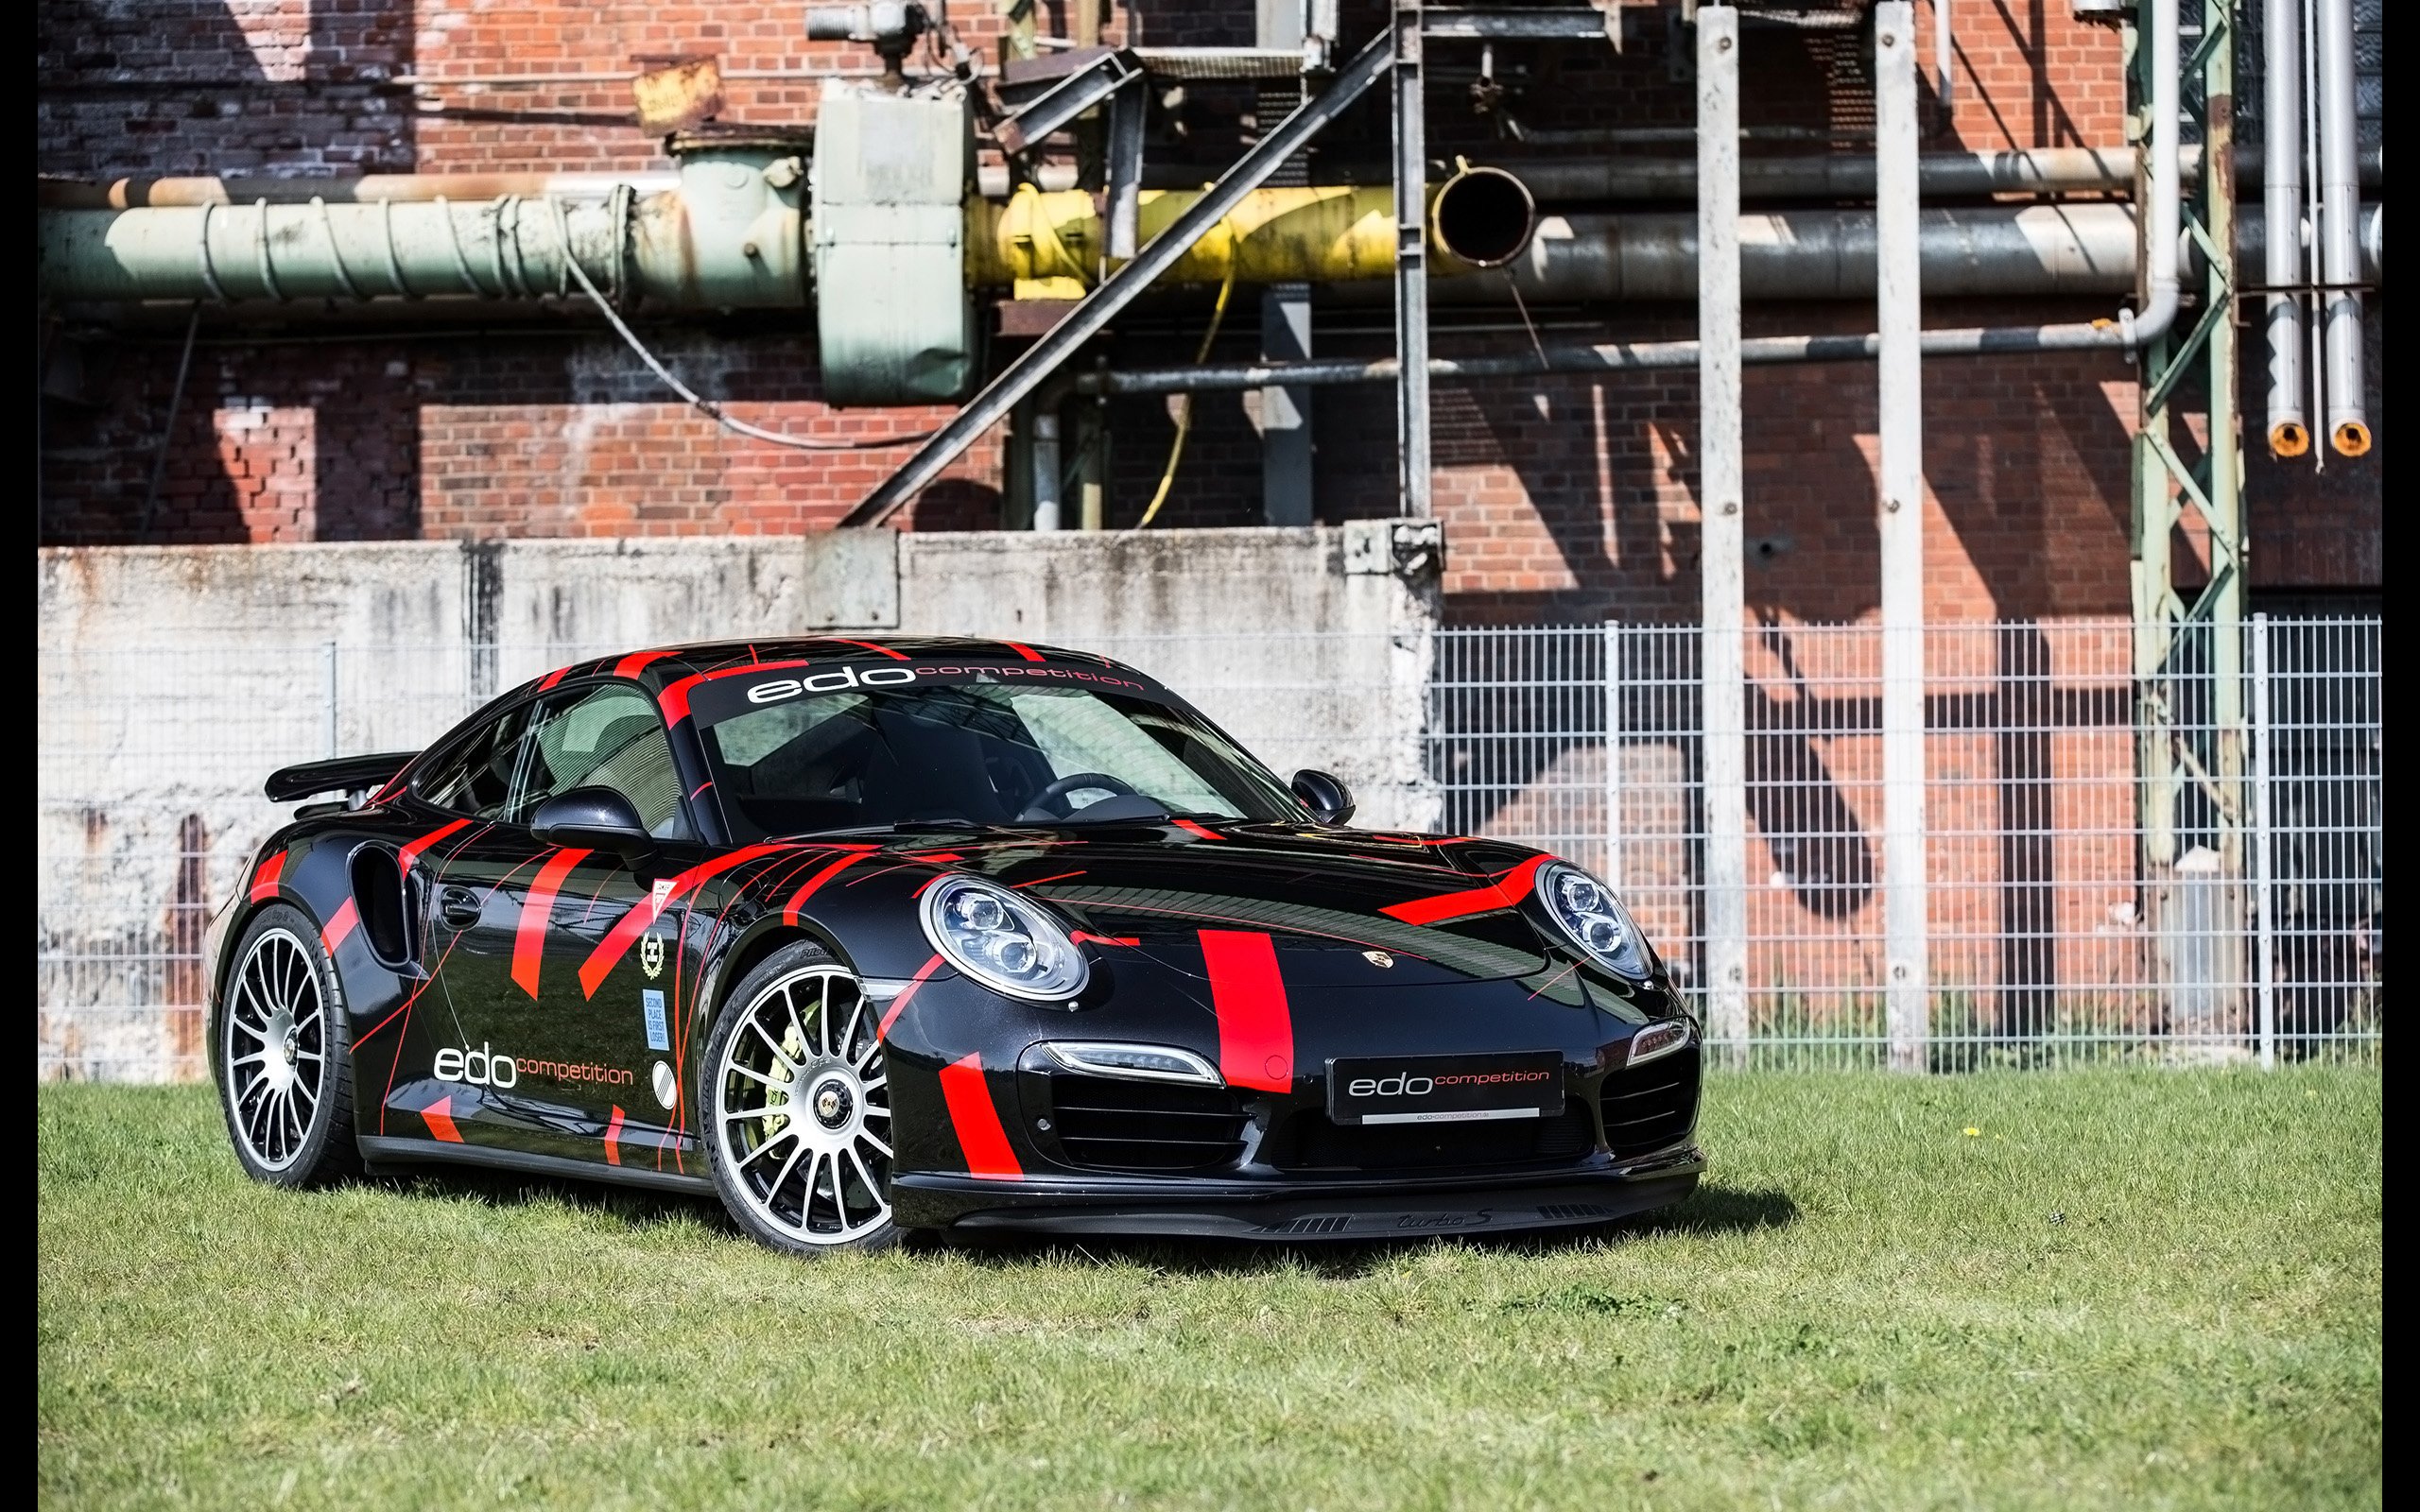 2014, Edo competition, Porsche, 991, Turbo, S, Tuning, 911 Wallpaper